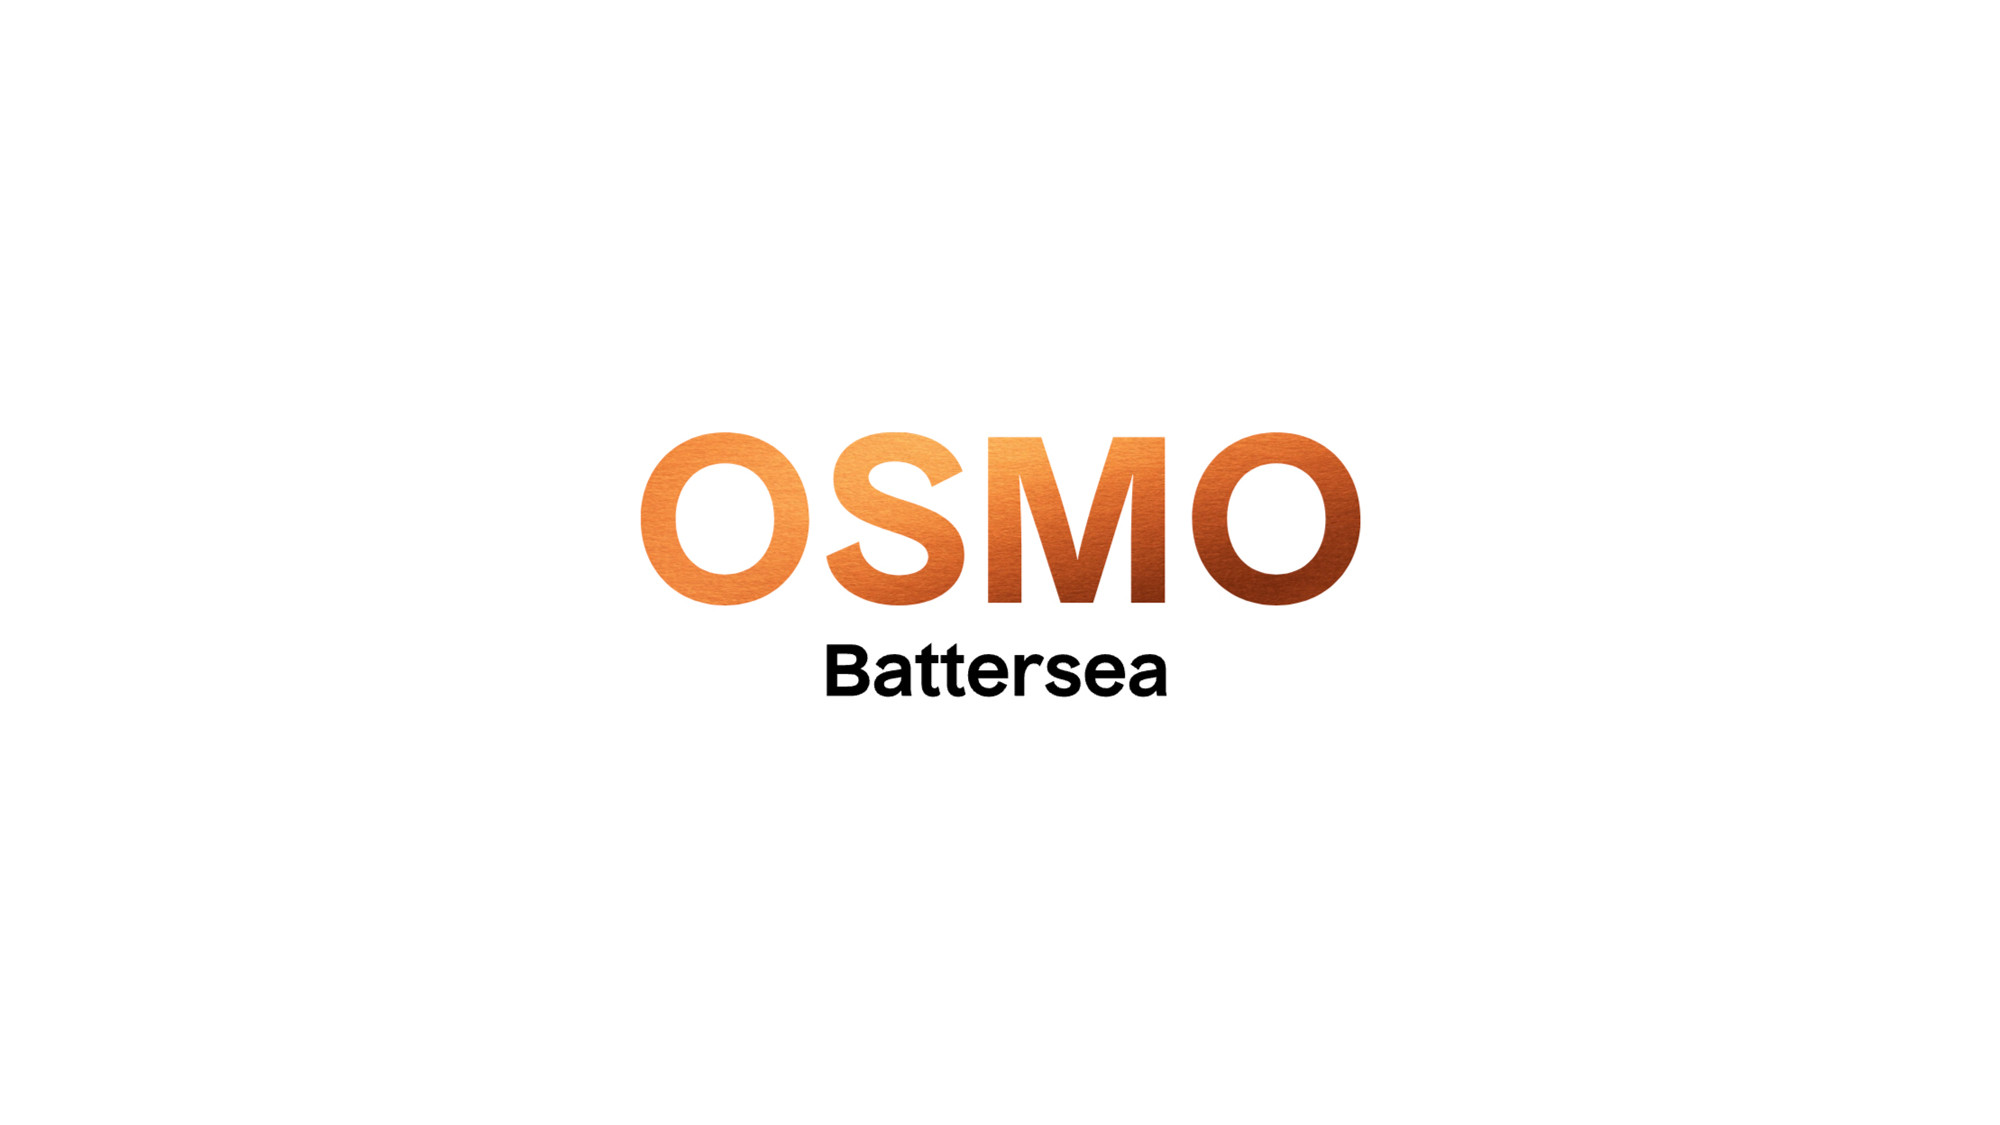 OSMO Battersea office development cover logo.